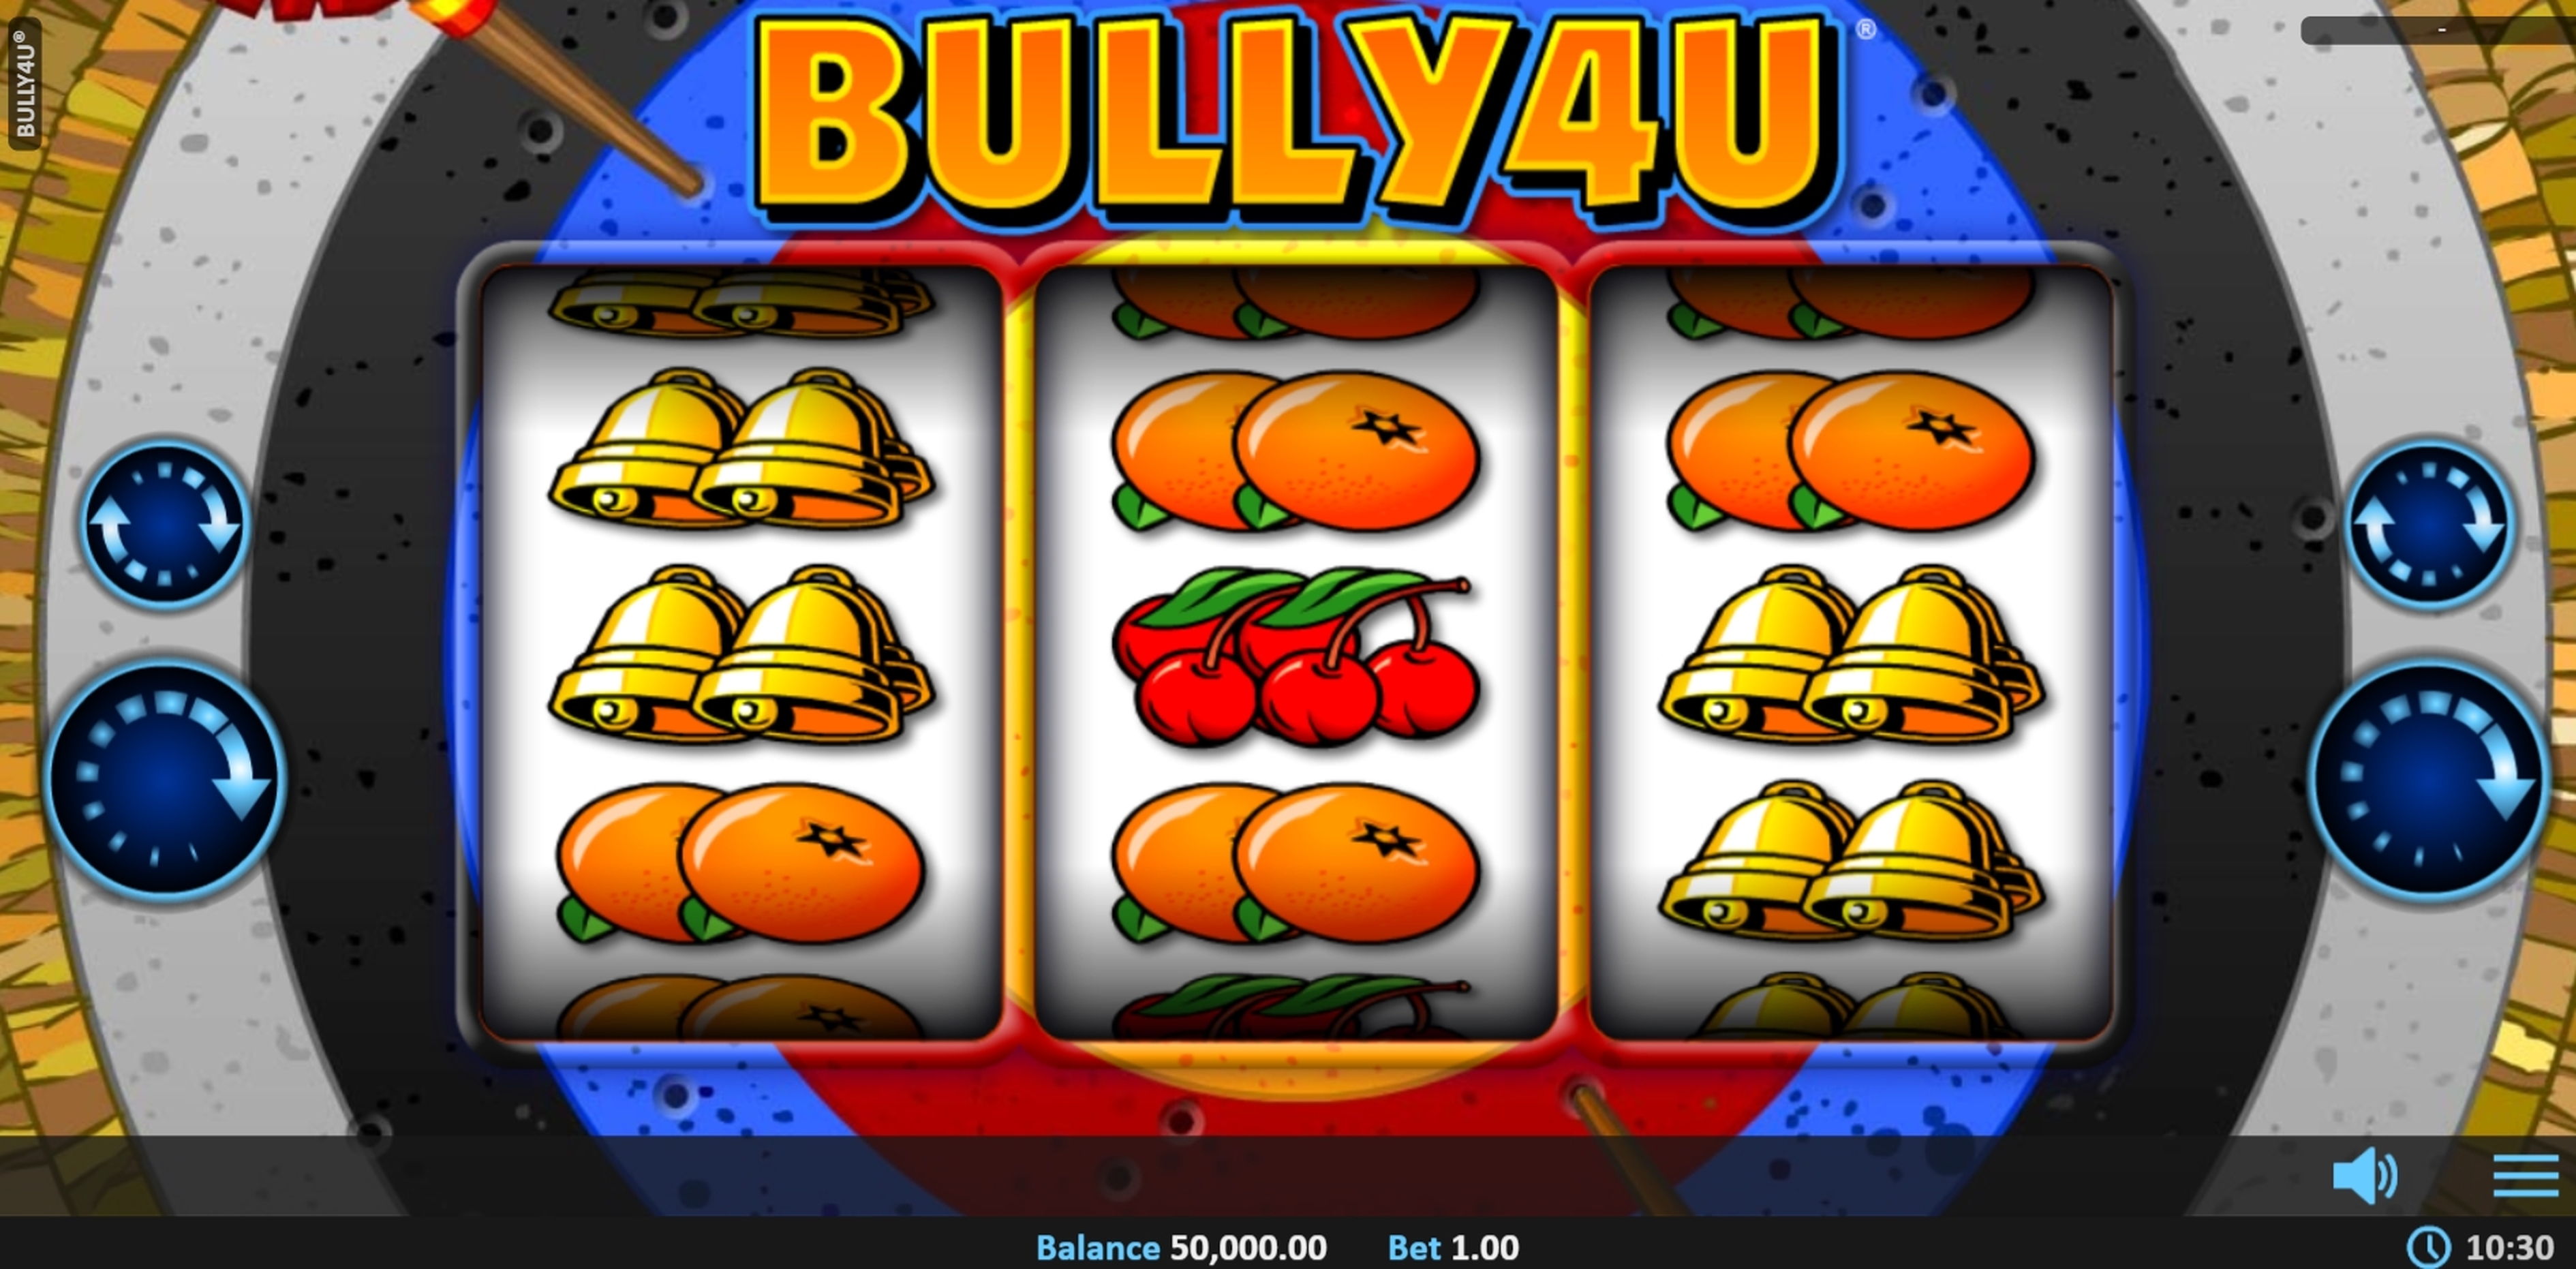 Reels in Bully4U Slot Game by Realistic Games